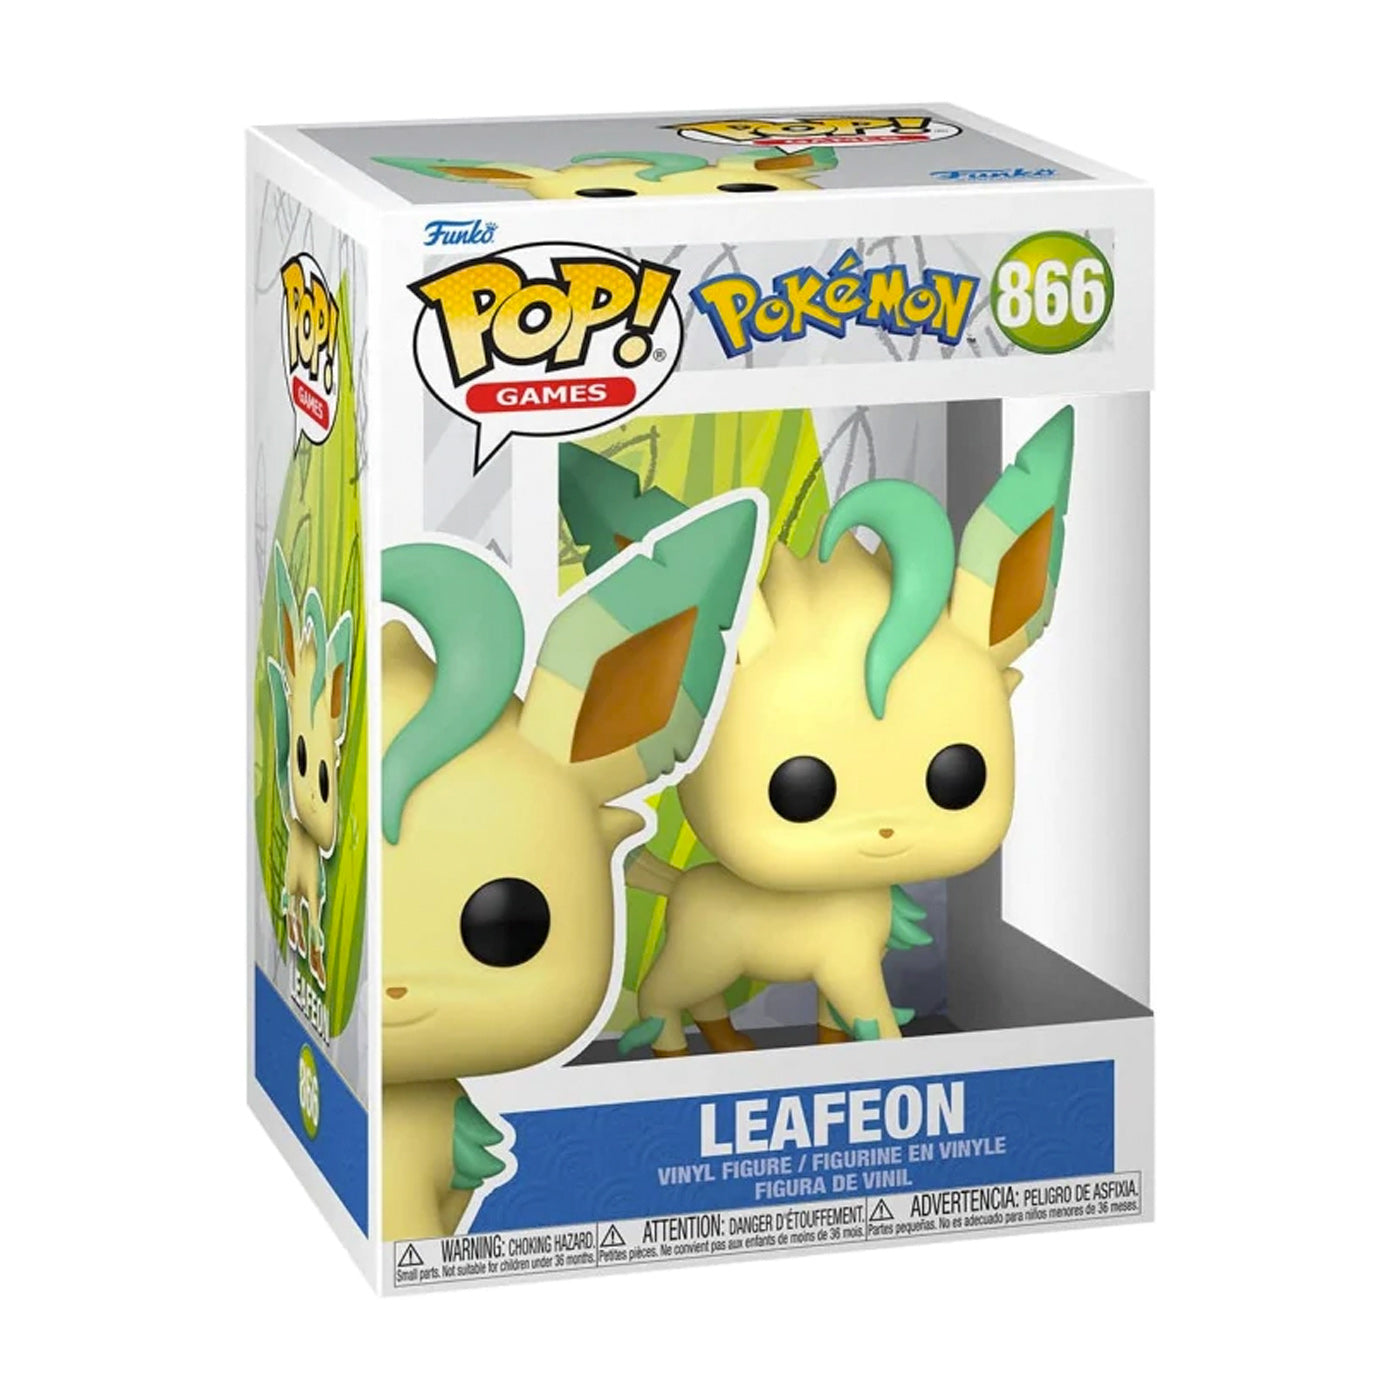 Funko Pop: Leafeon (866)